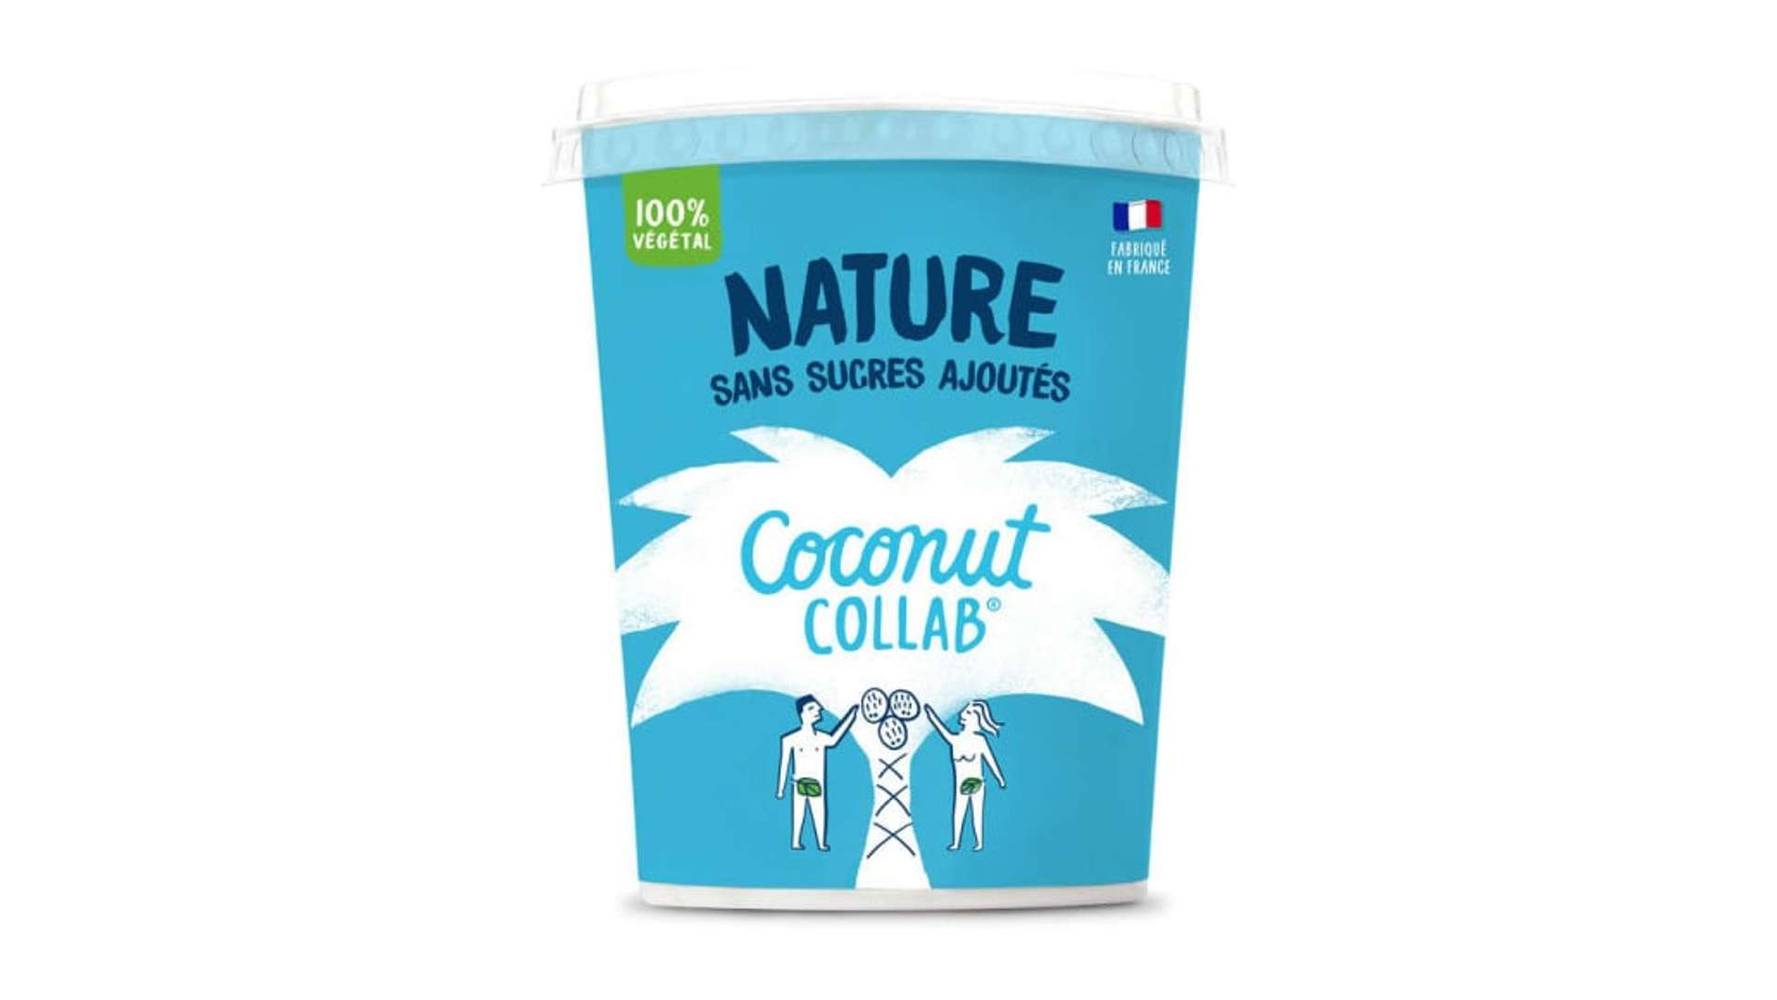 The Coconut Collab - Yaourt végétal coco nature